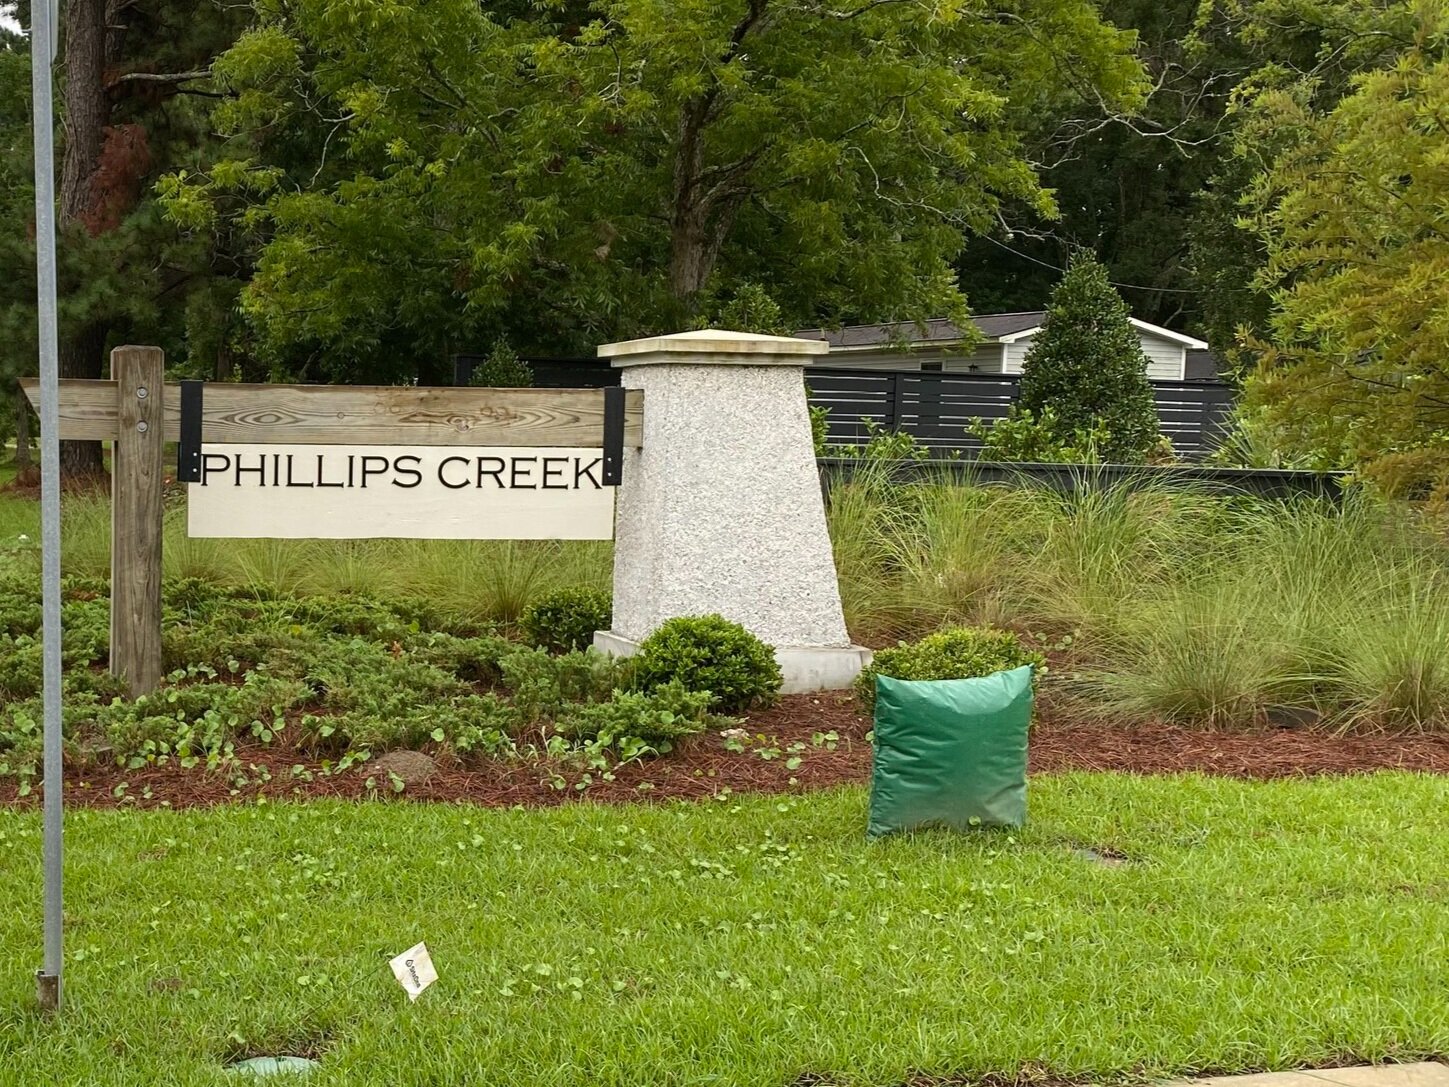 Phillips Creek